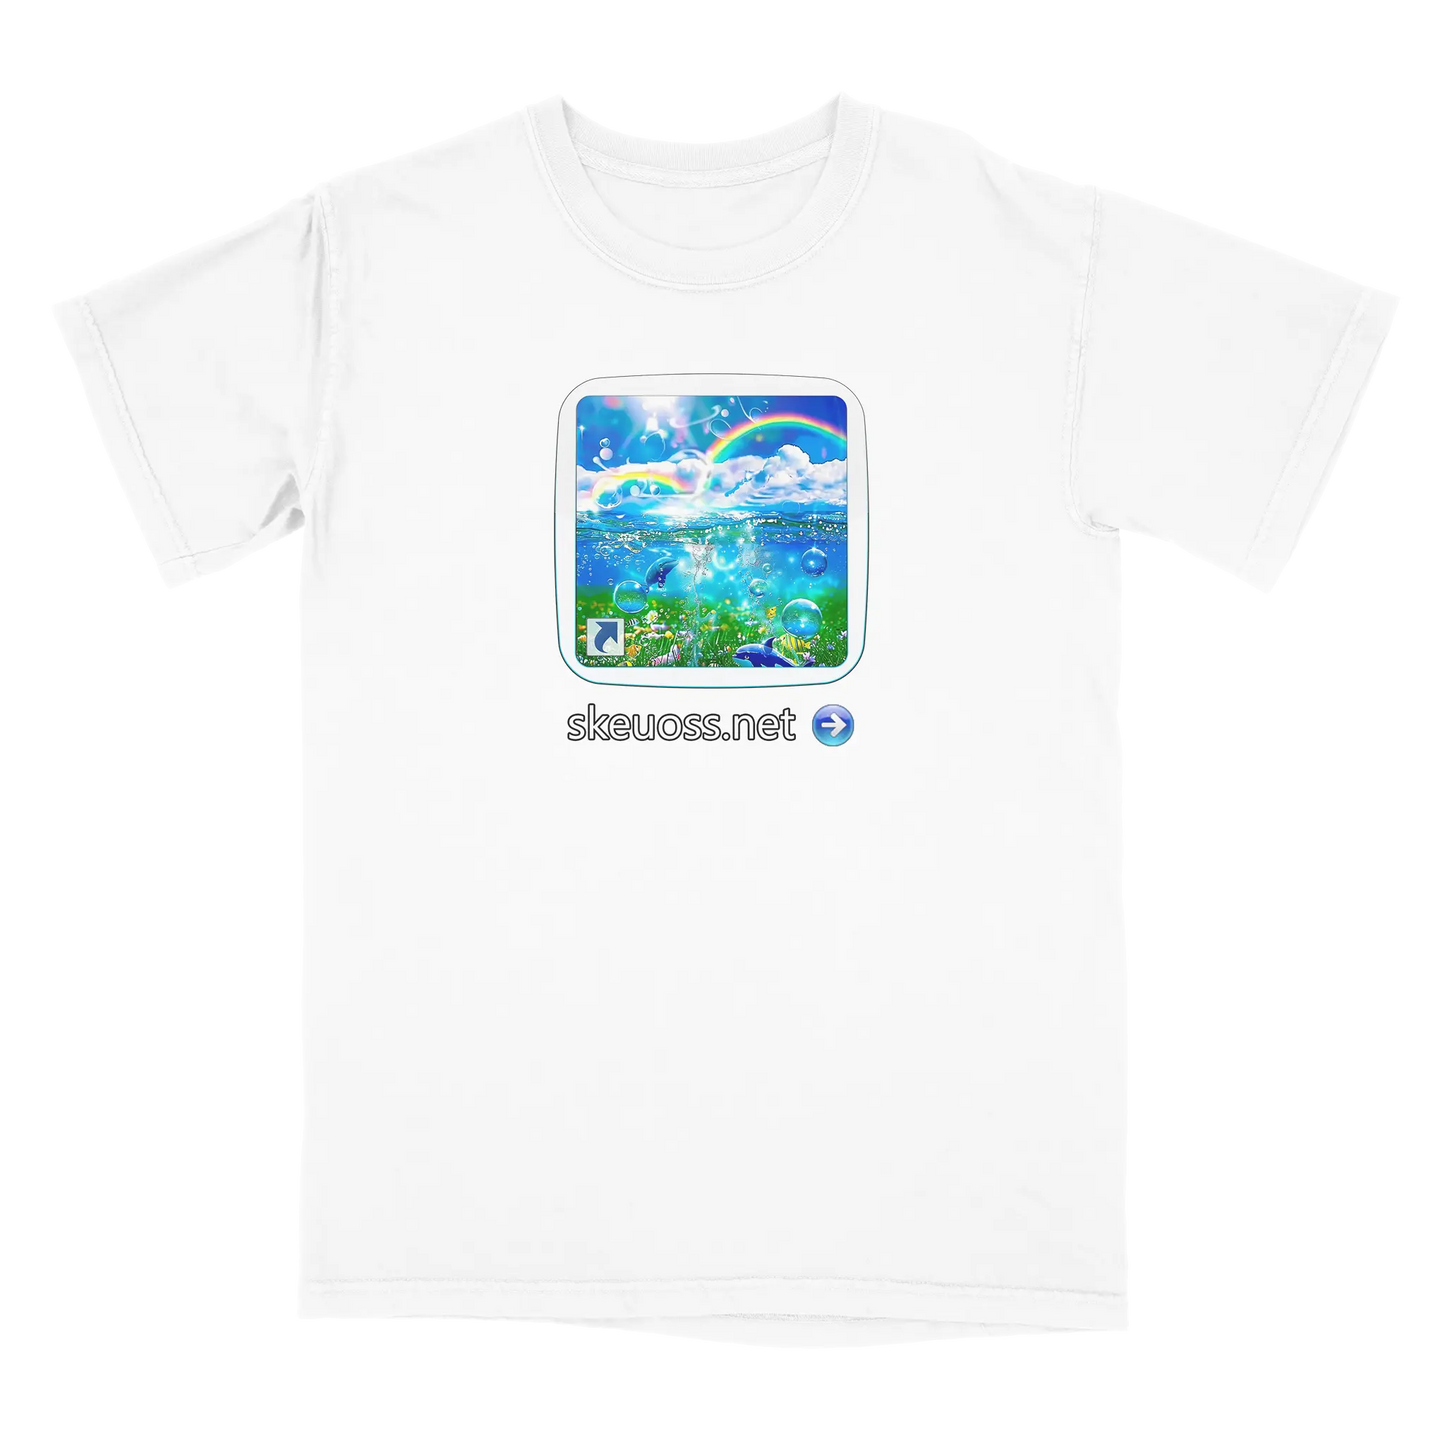 Frutiger Aero T-shirt - User Login Collection - User 295